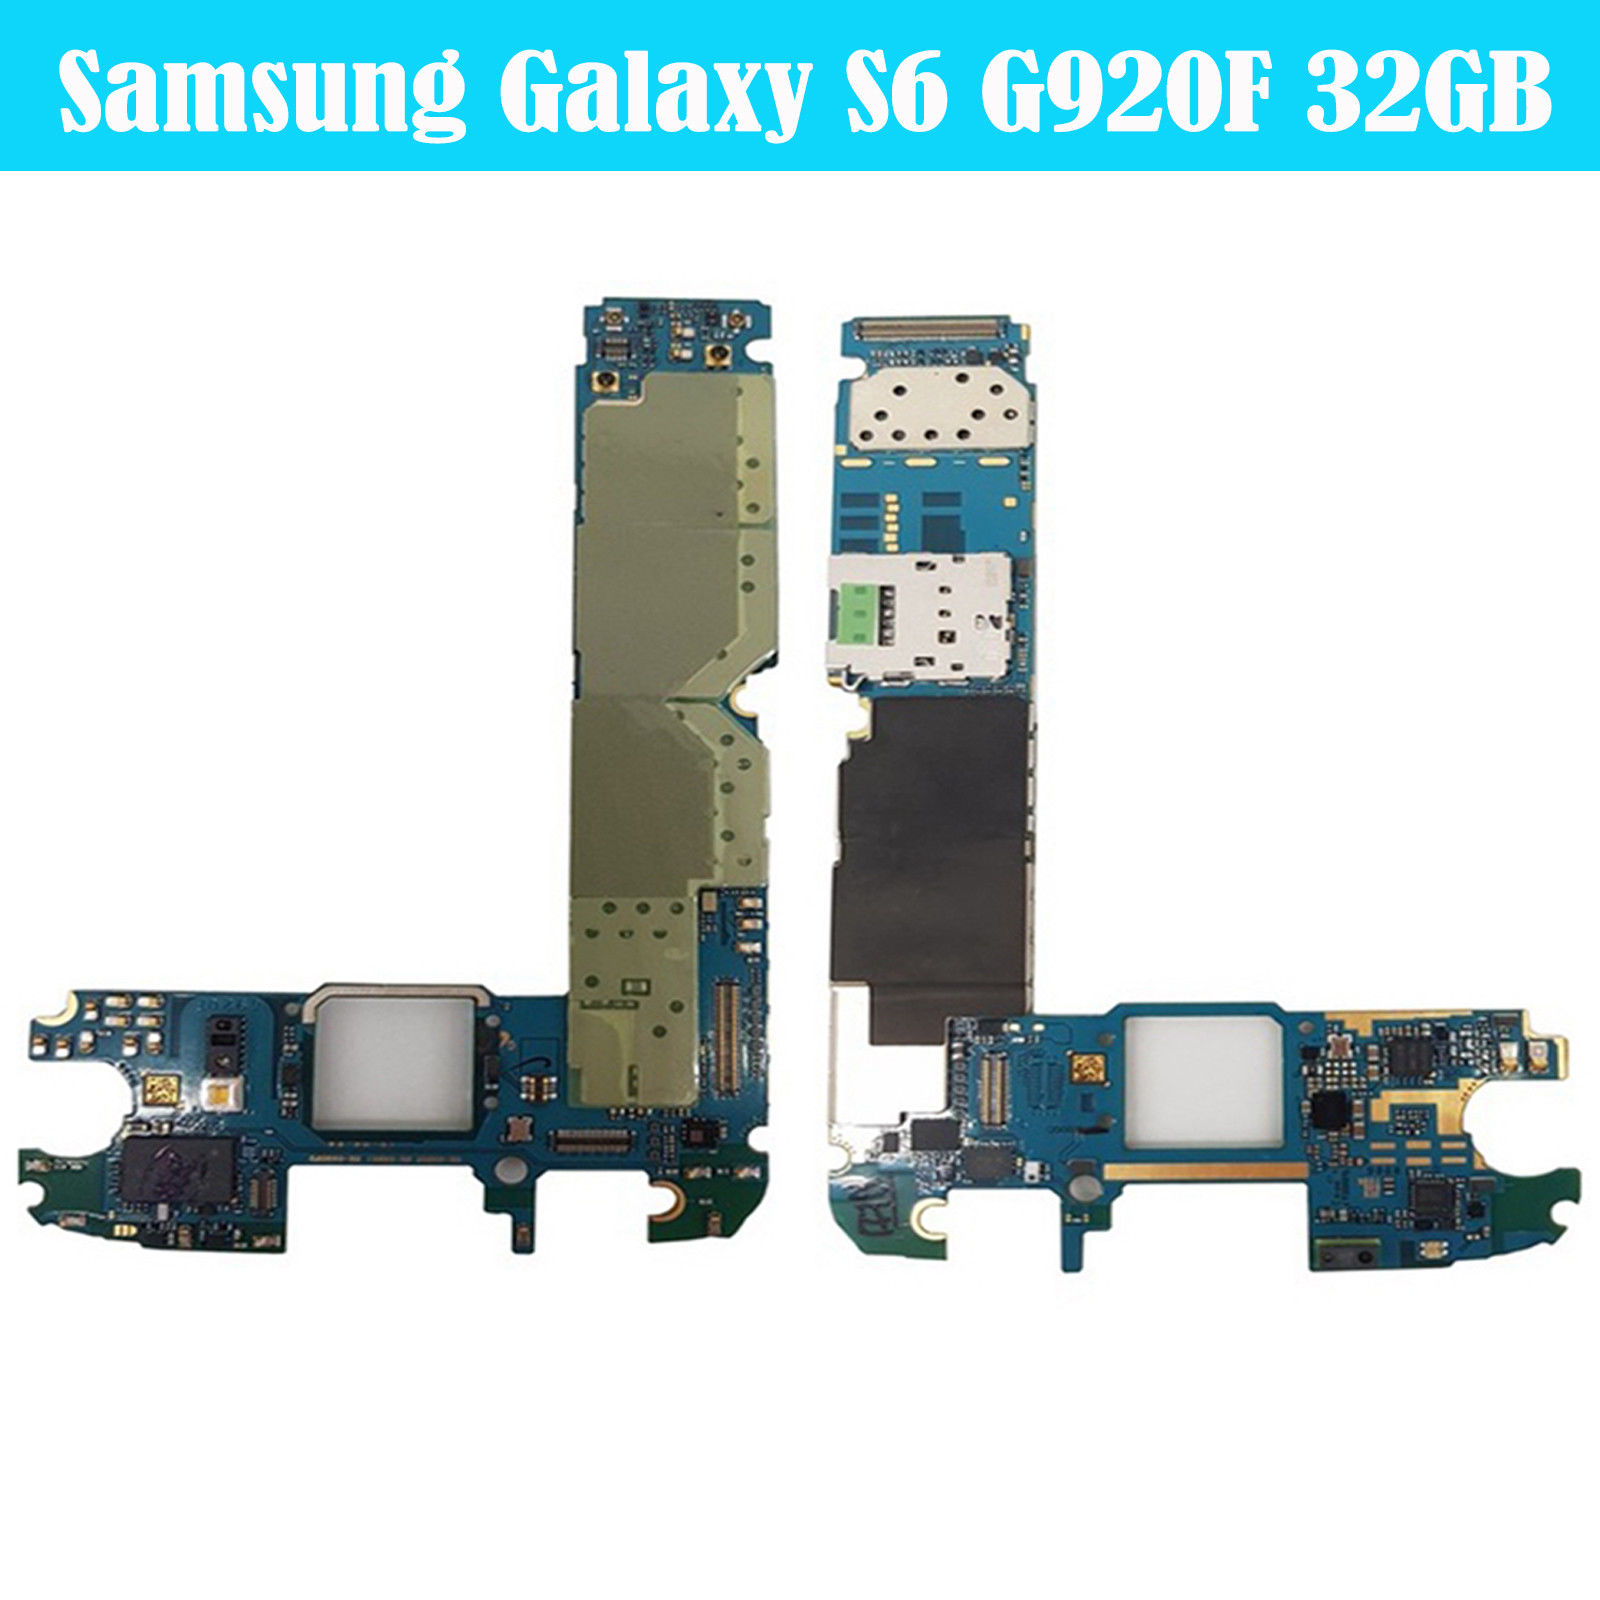 Samsung Galaxy S6 G920F 32GB Unlocked Main/Logic Board Motherboard